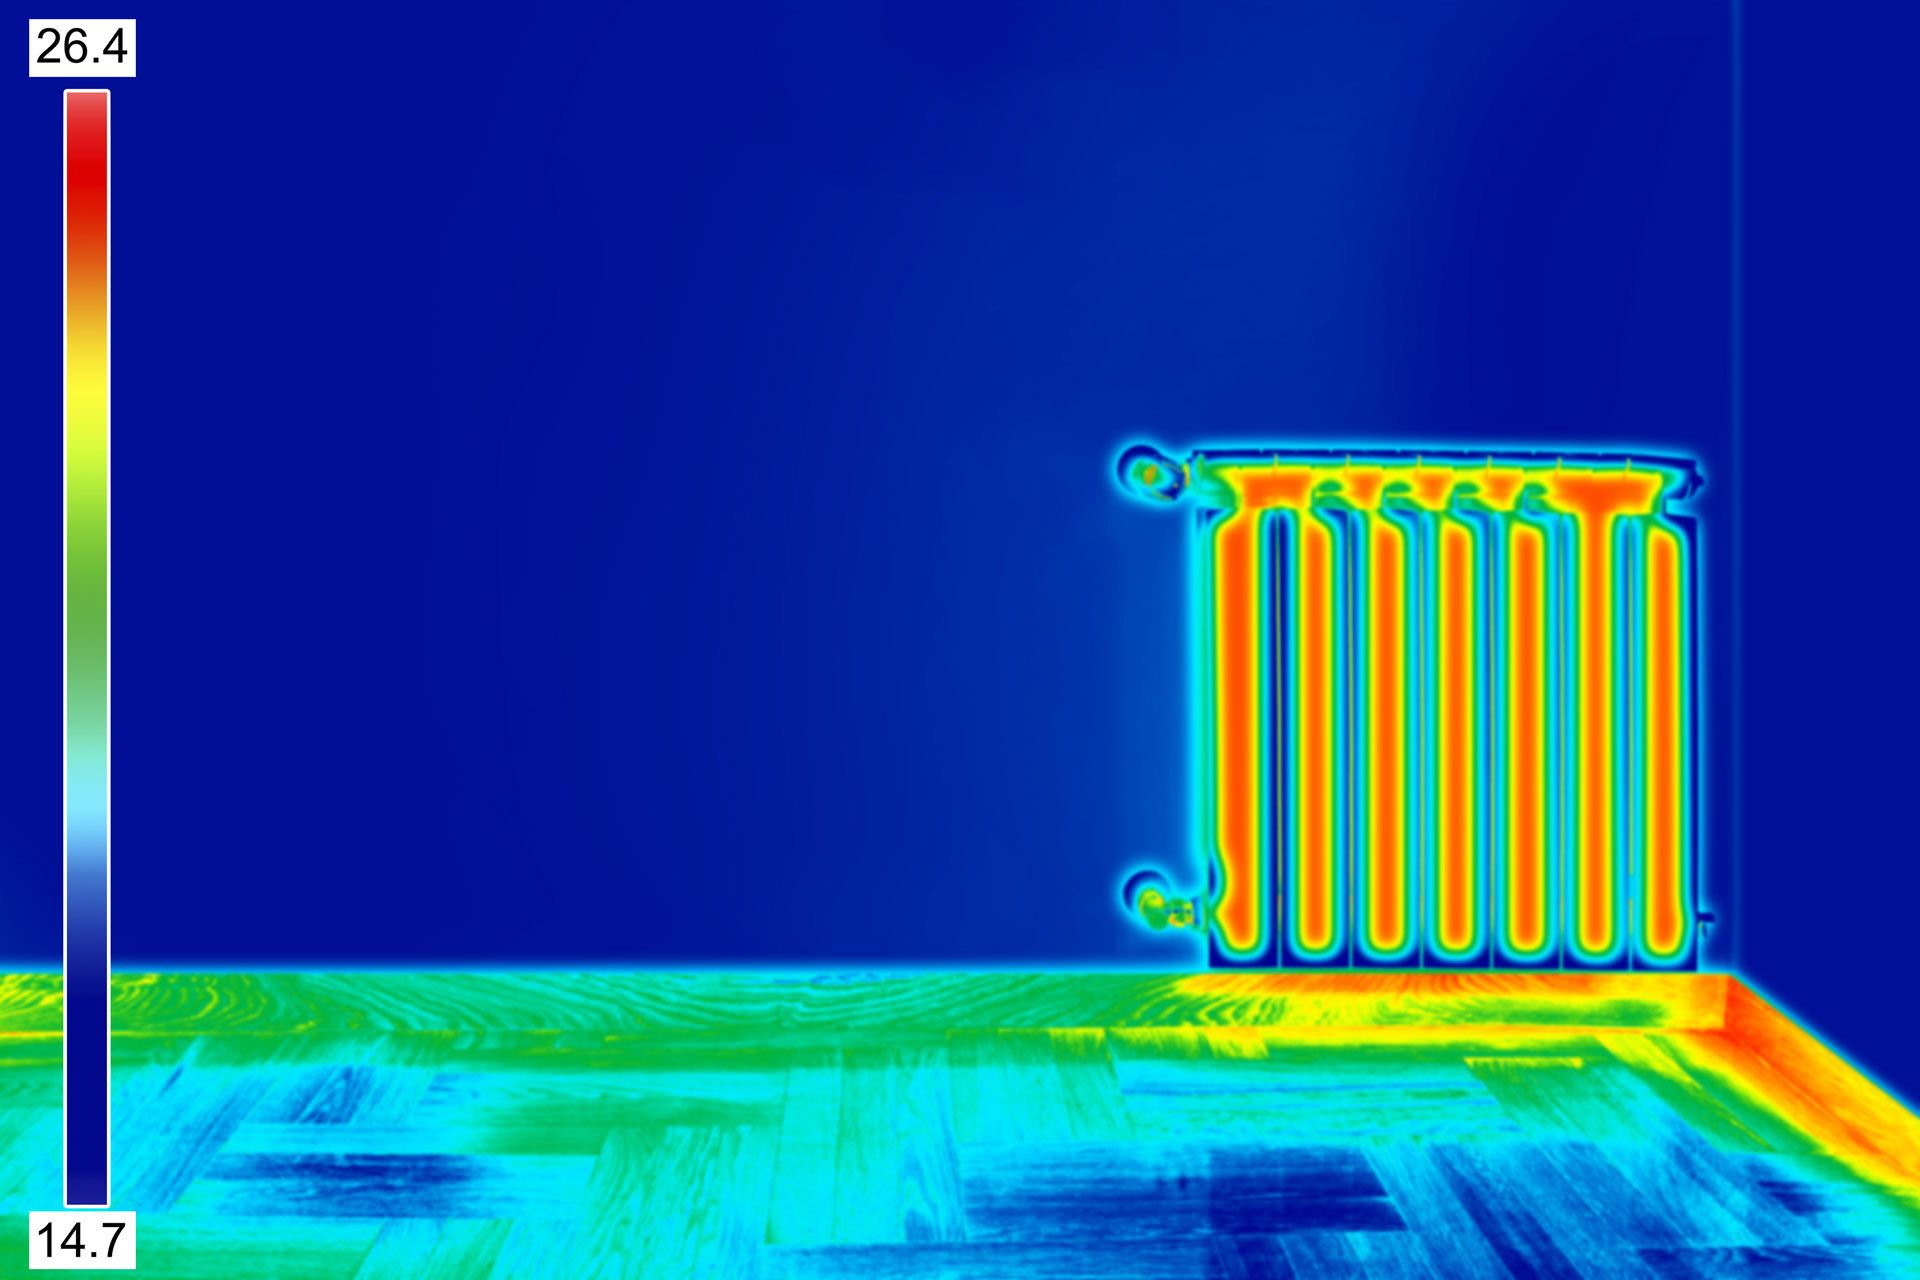 Modern Heating Radiator with Programming Thermostat on orange wall